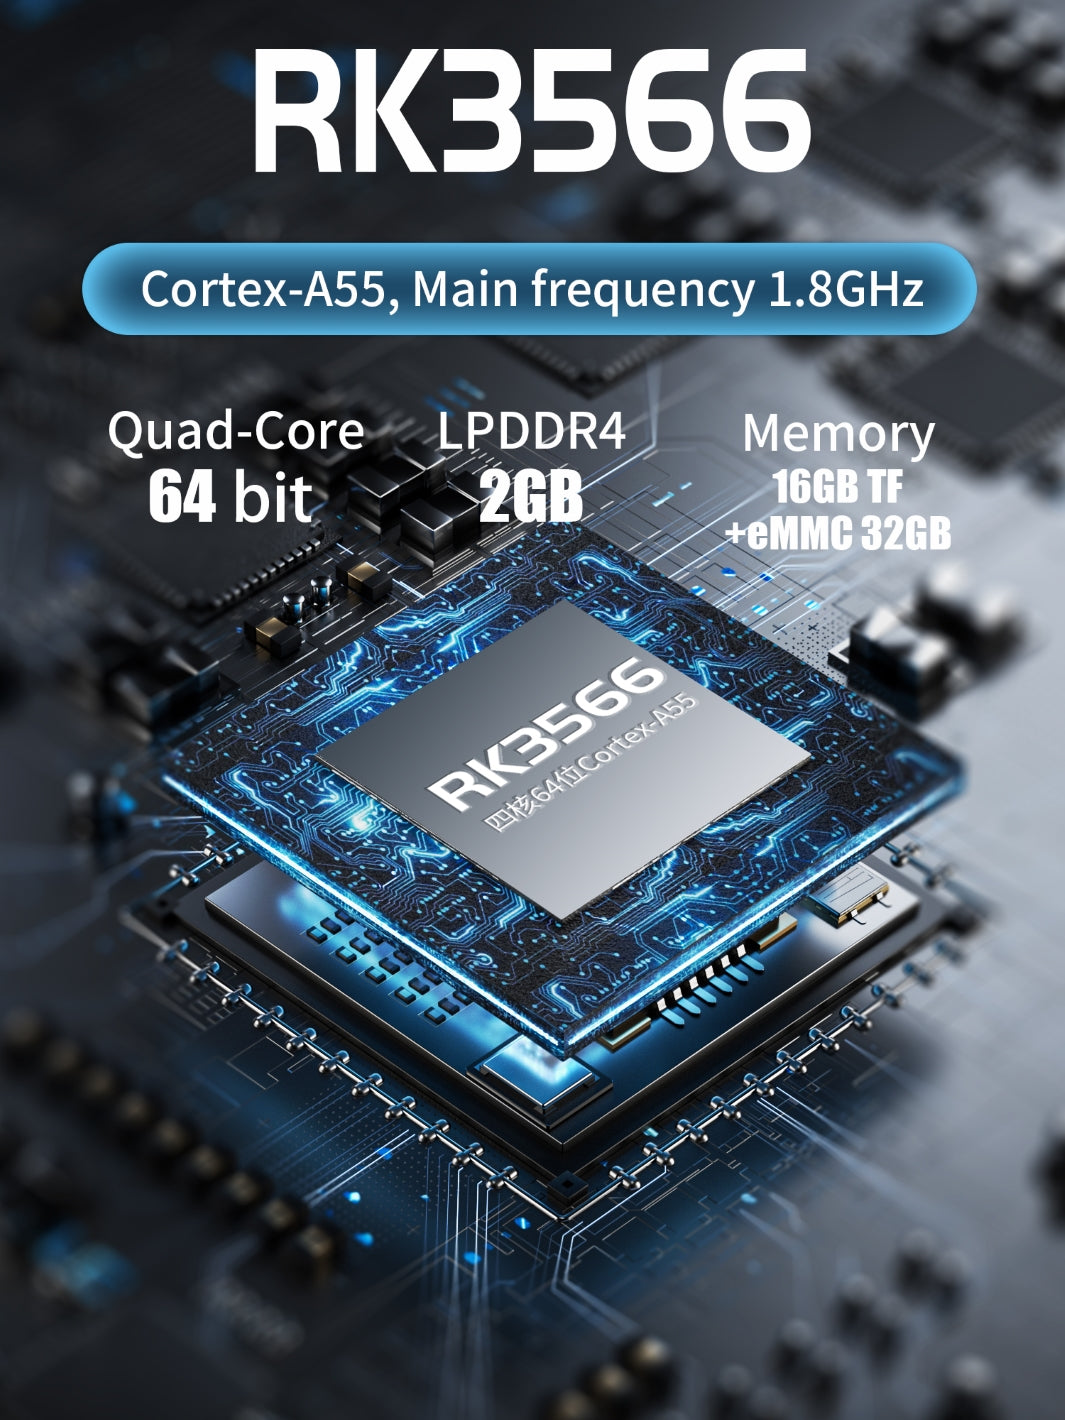 Anbernic RG ARC-D RK3566 Cortex-A55 CPU running at 1.8GHz; Quad-core 64bit/ 2GB LPDDR4 RAM. Expandable storage.